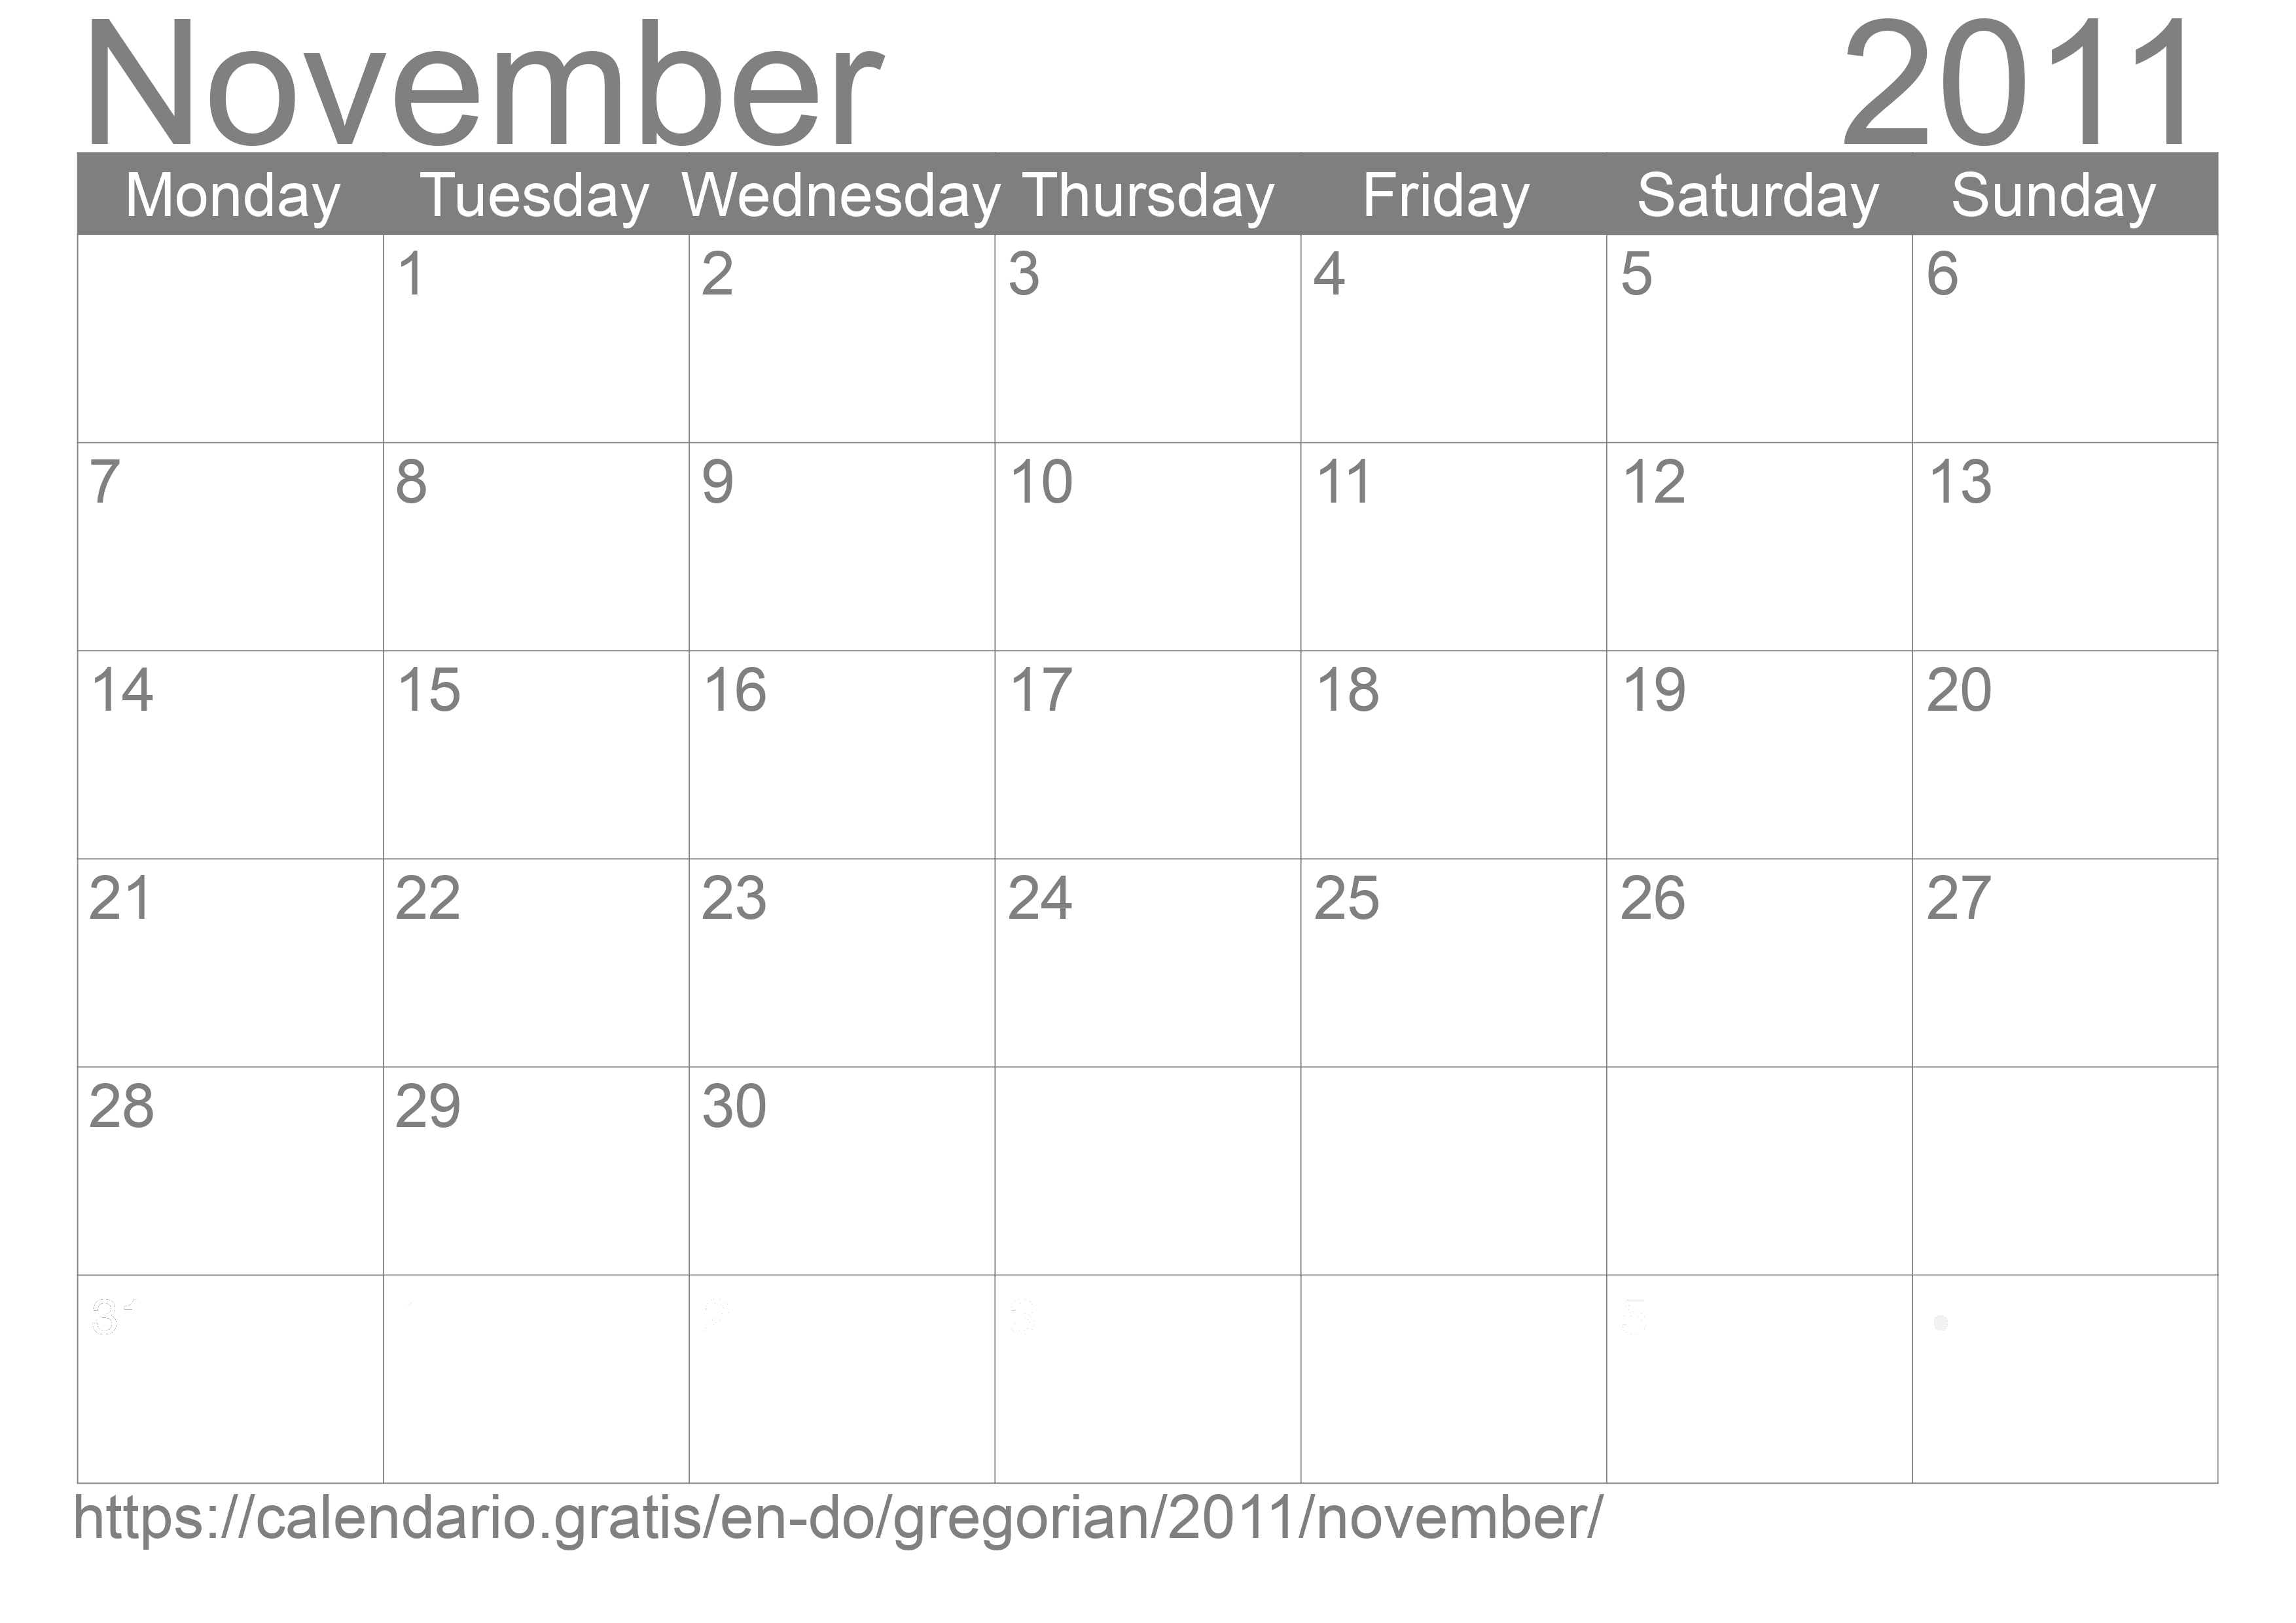 Calendar November 2011 to print